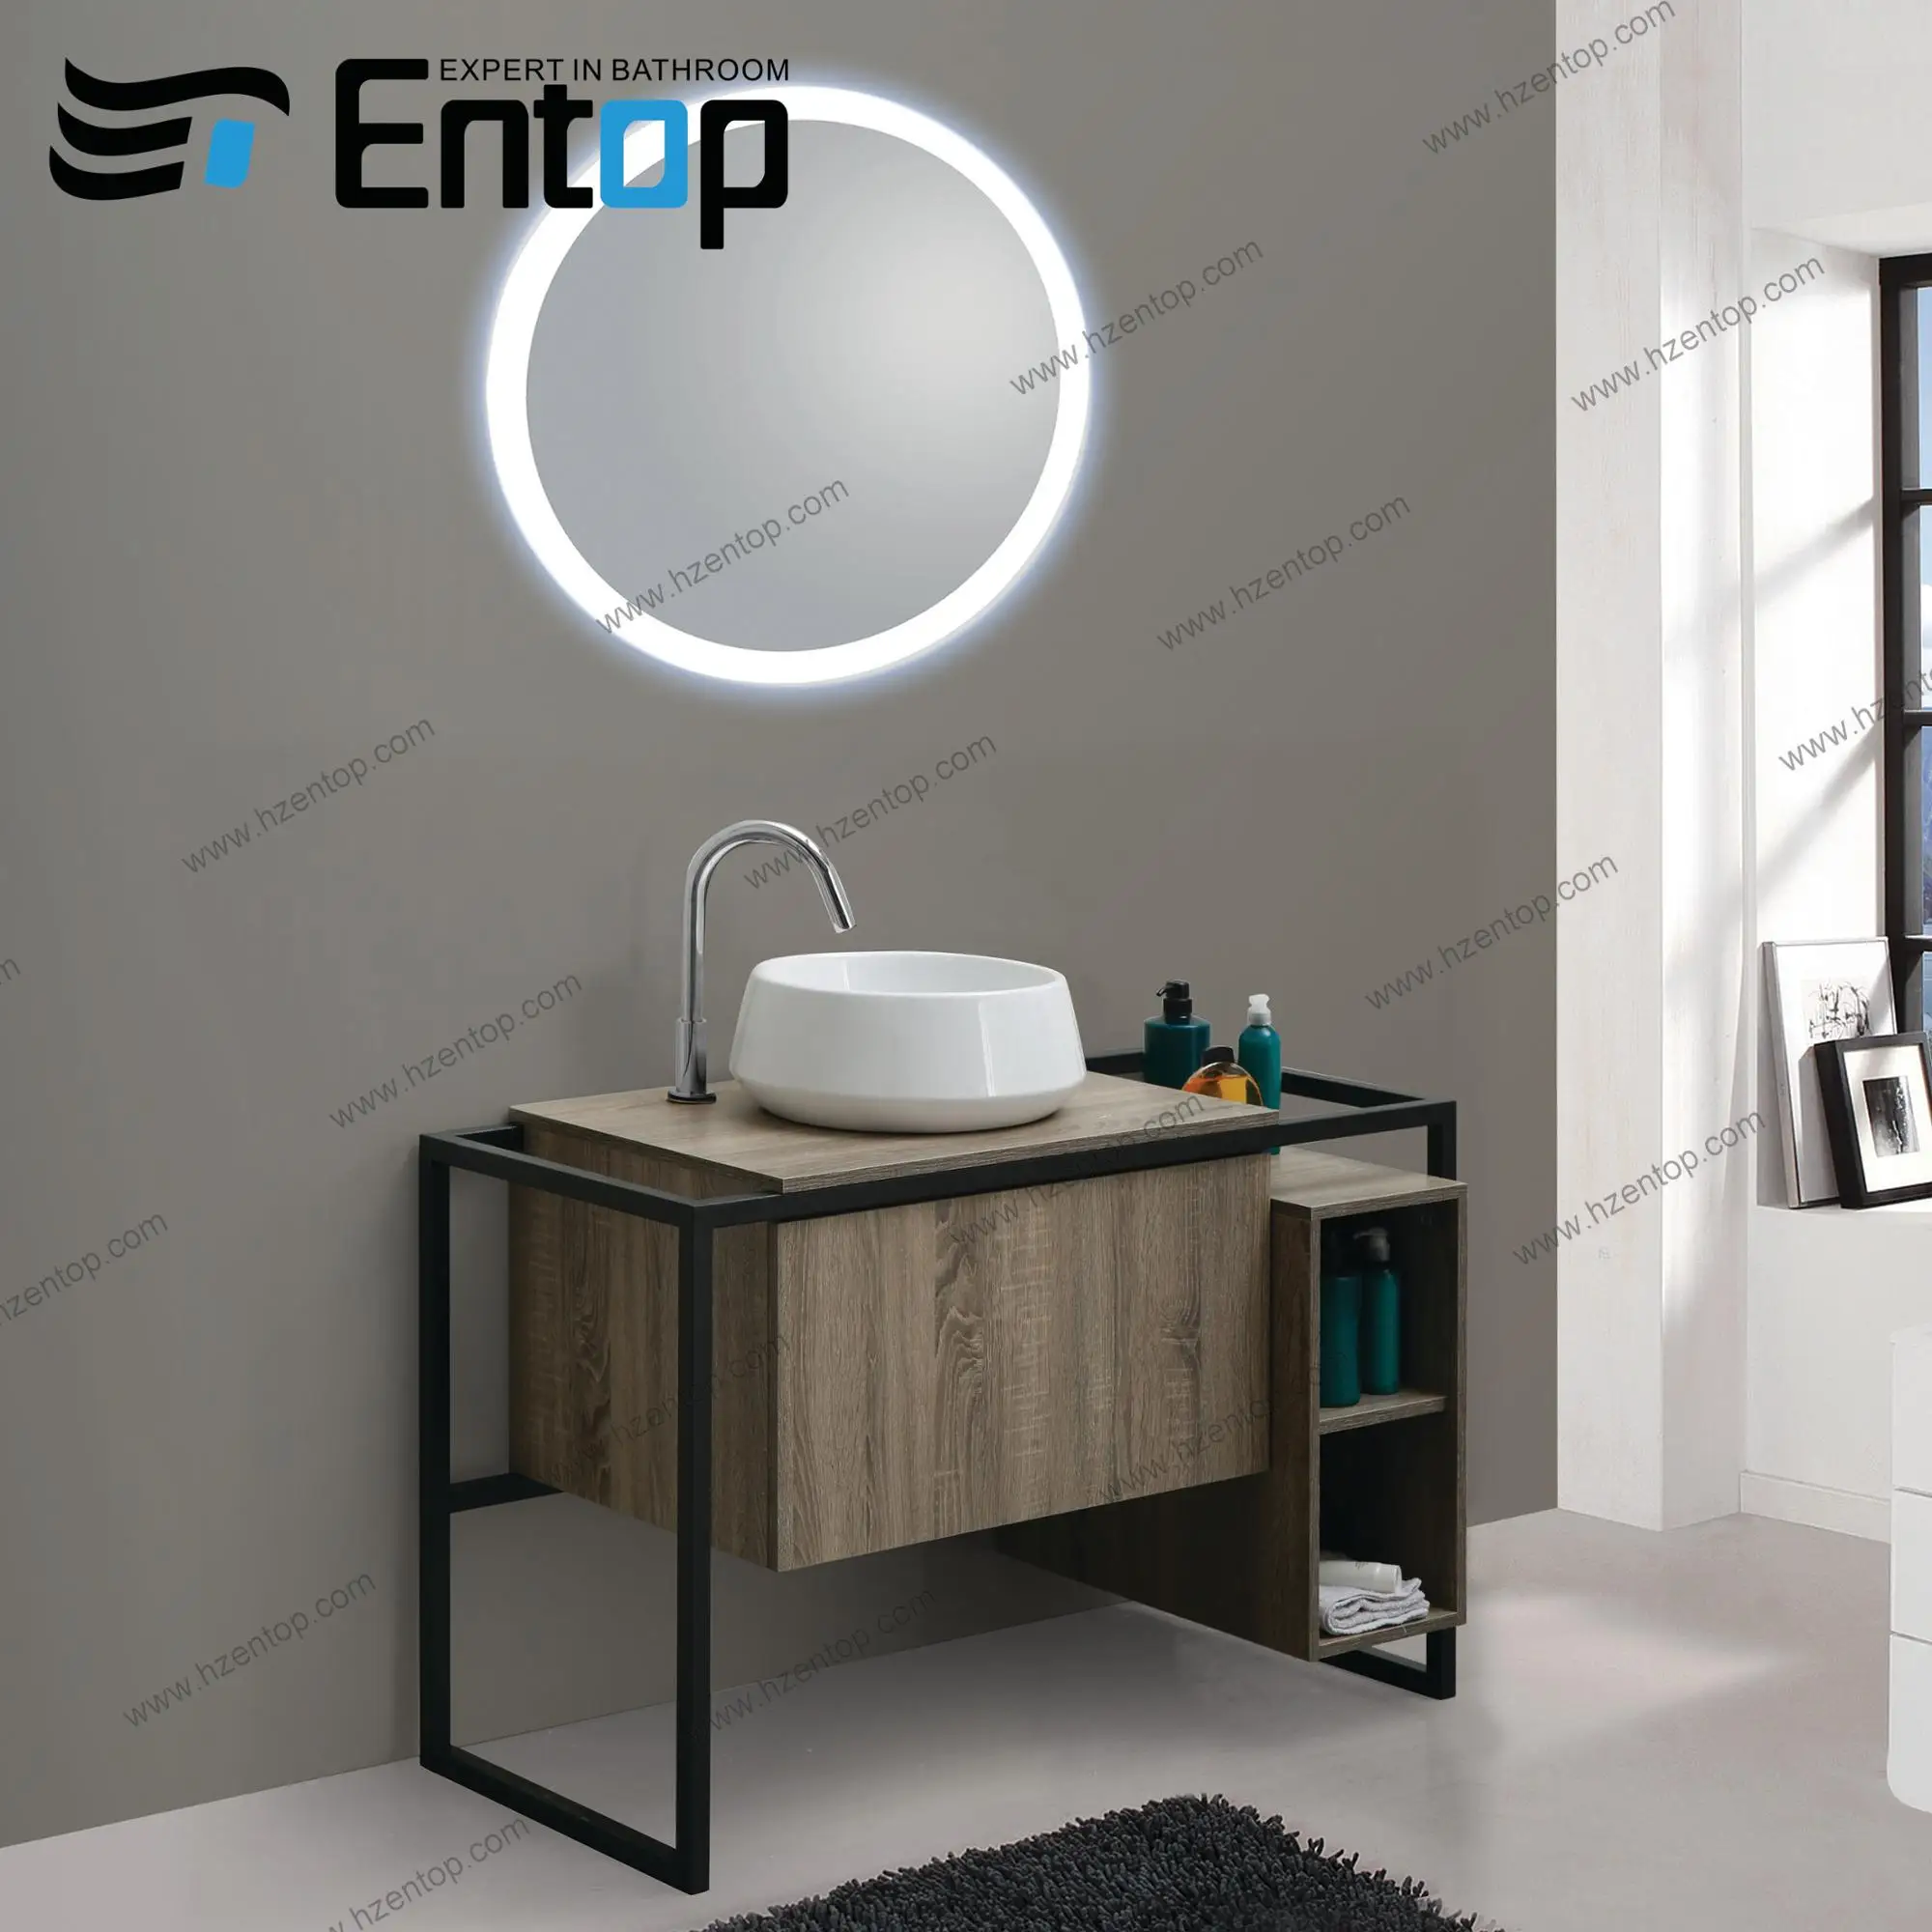 Entop Mdf Modern Bathroom Vanities Furniture American Style Other For Hotel Designed Bathroom Cabinet Buy Bathroom Cabinet